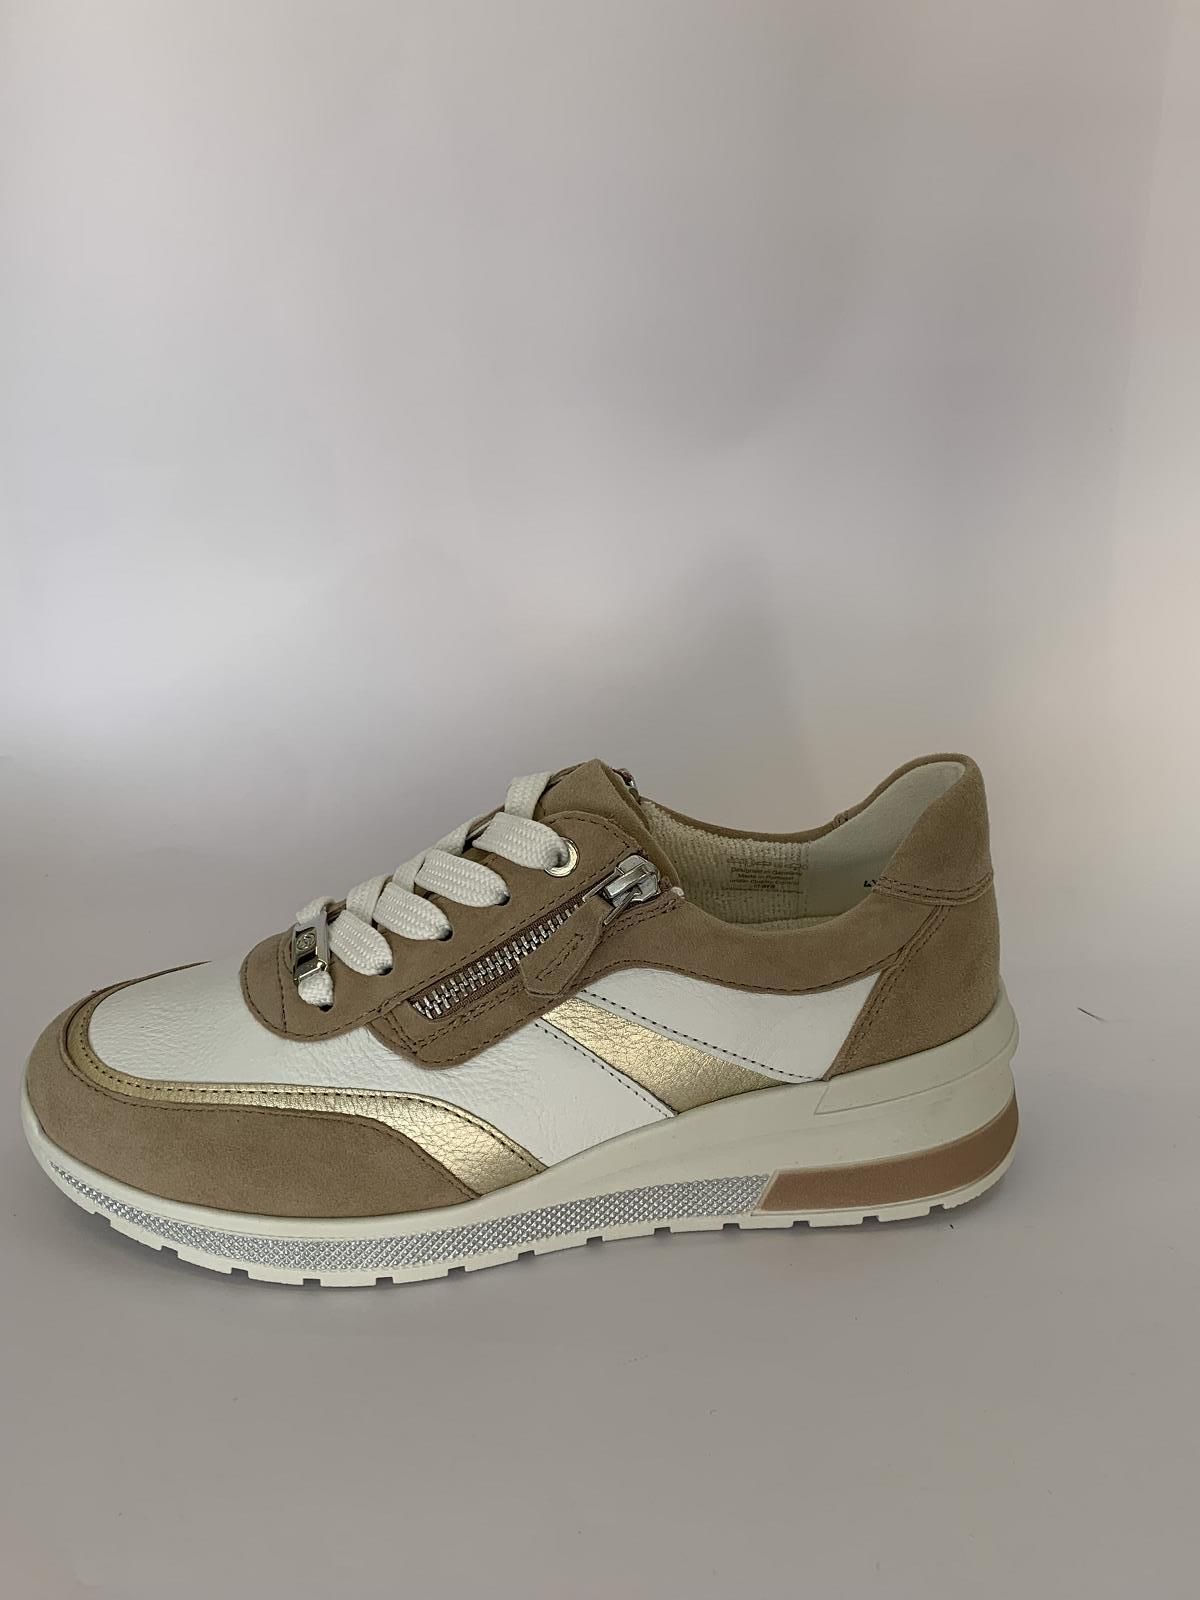 Ara Veterschoen Wit+kleur dames (Sneaker Wit-Beige - 8414-06) - Schoenen Luca